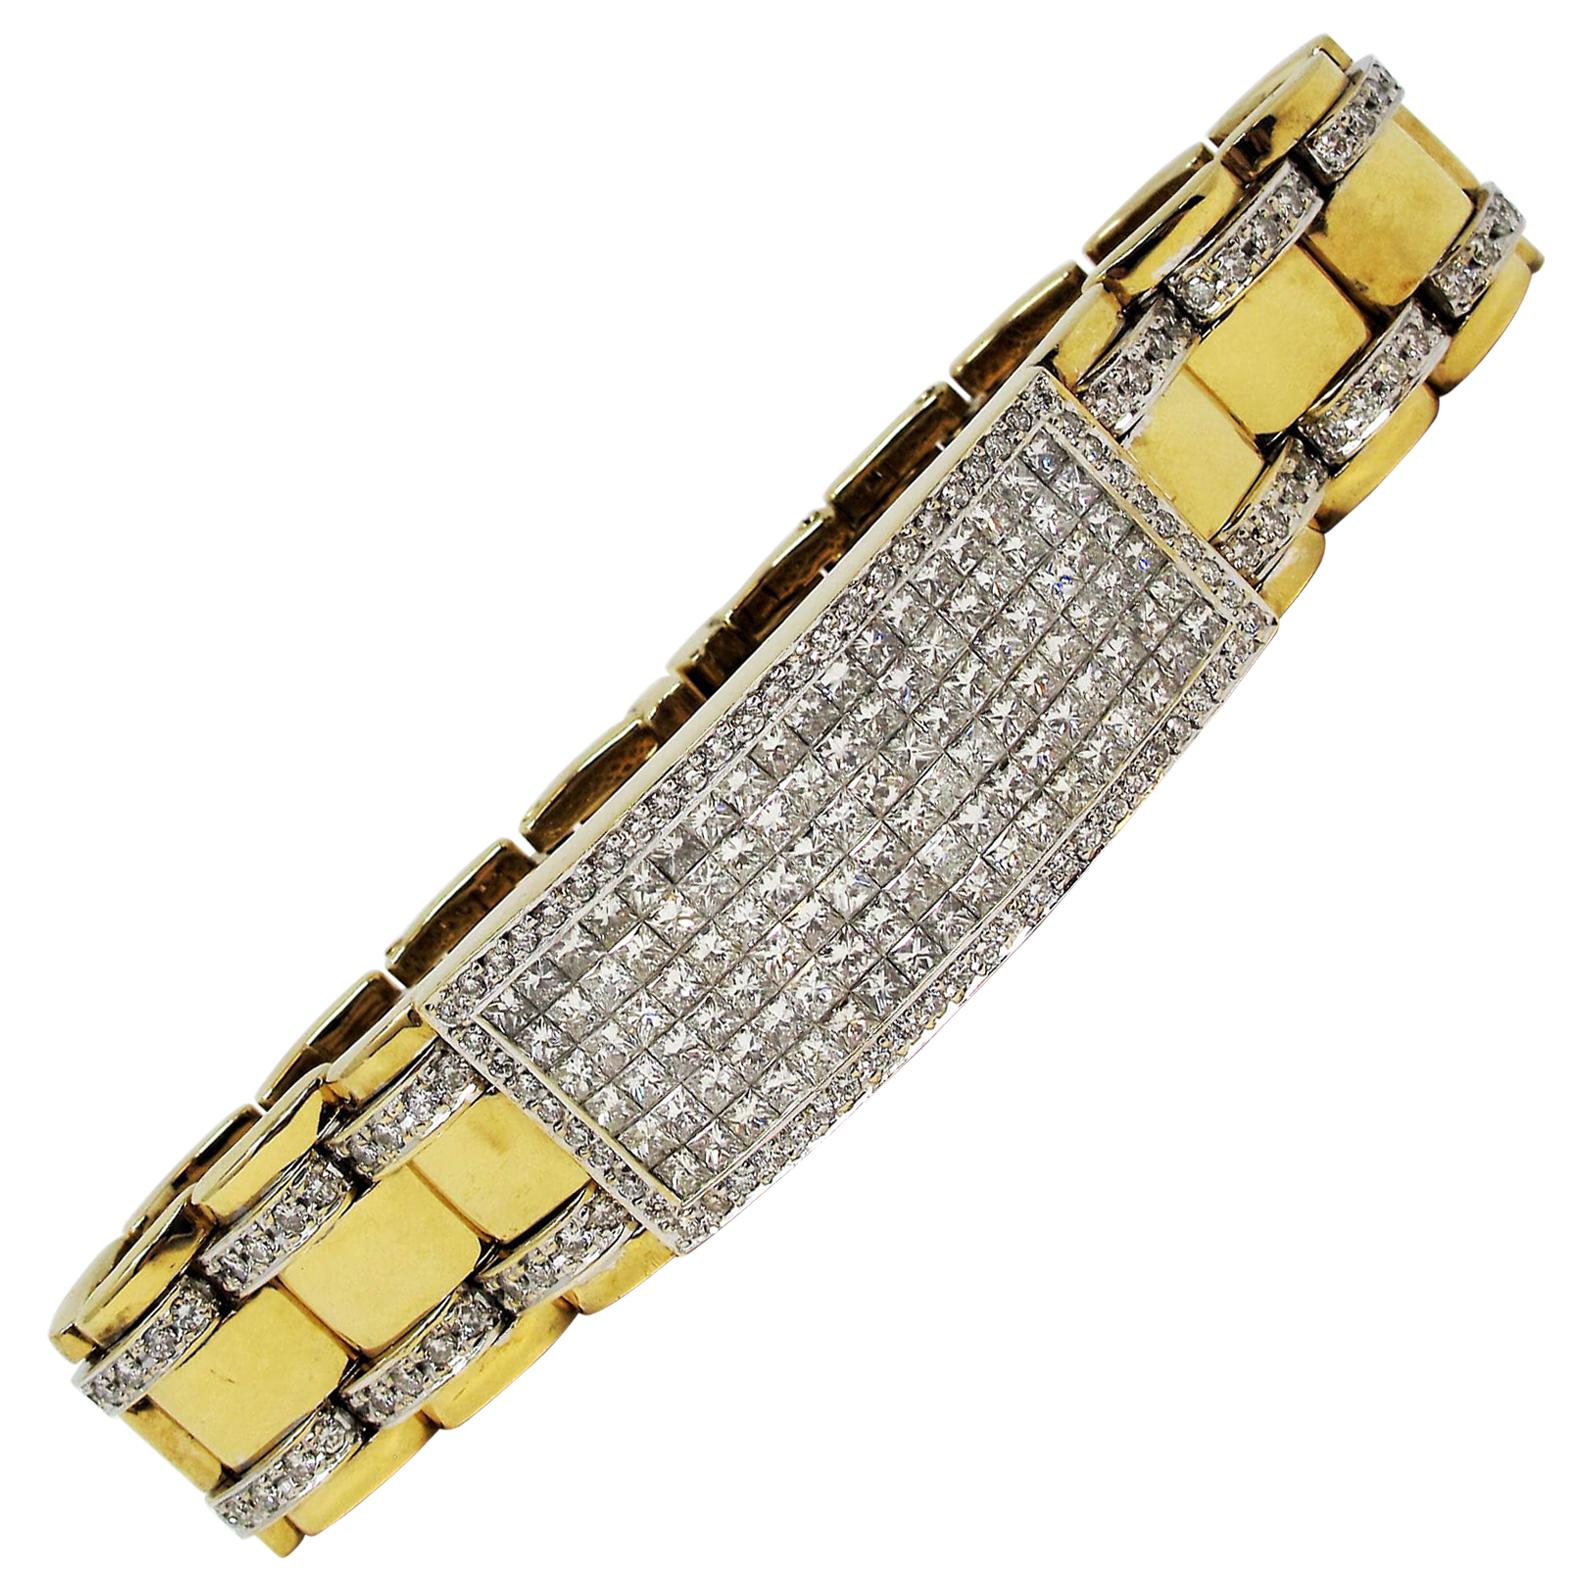 13.24 Carats Total Weight Princess Cut Diamond ID Link Bracelet in 14 Karat Gold